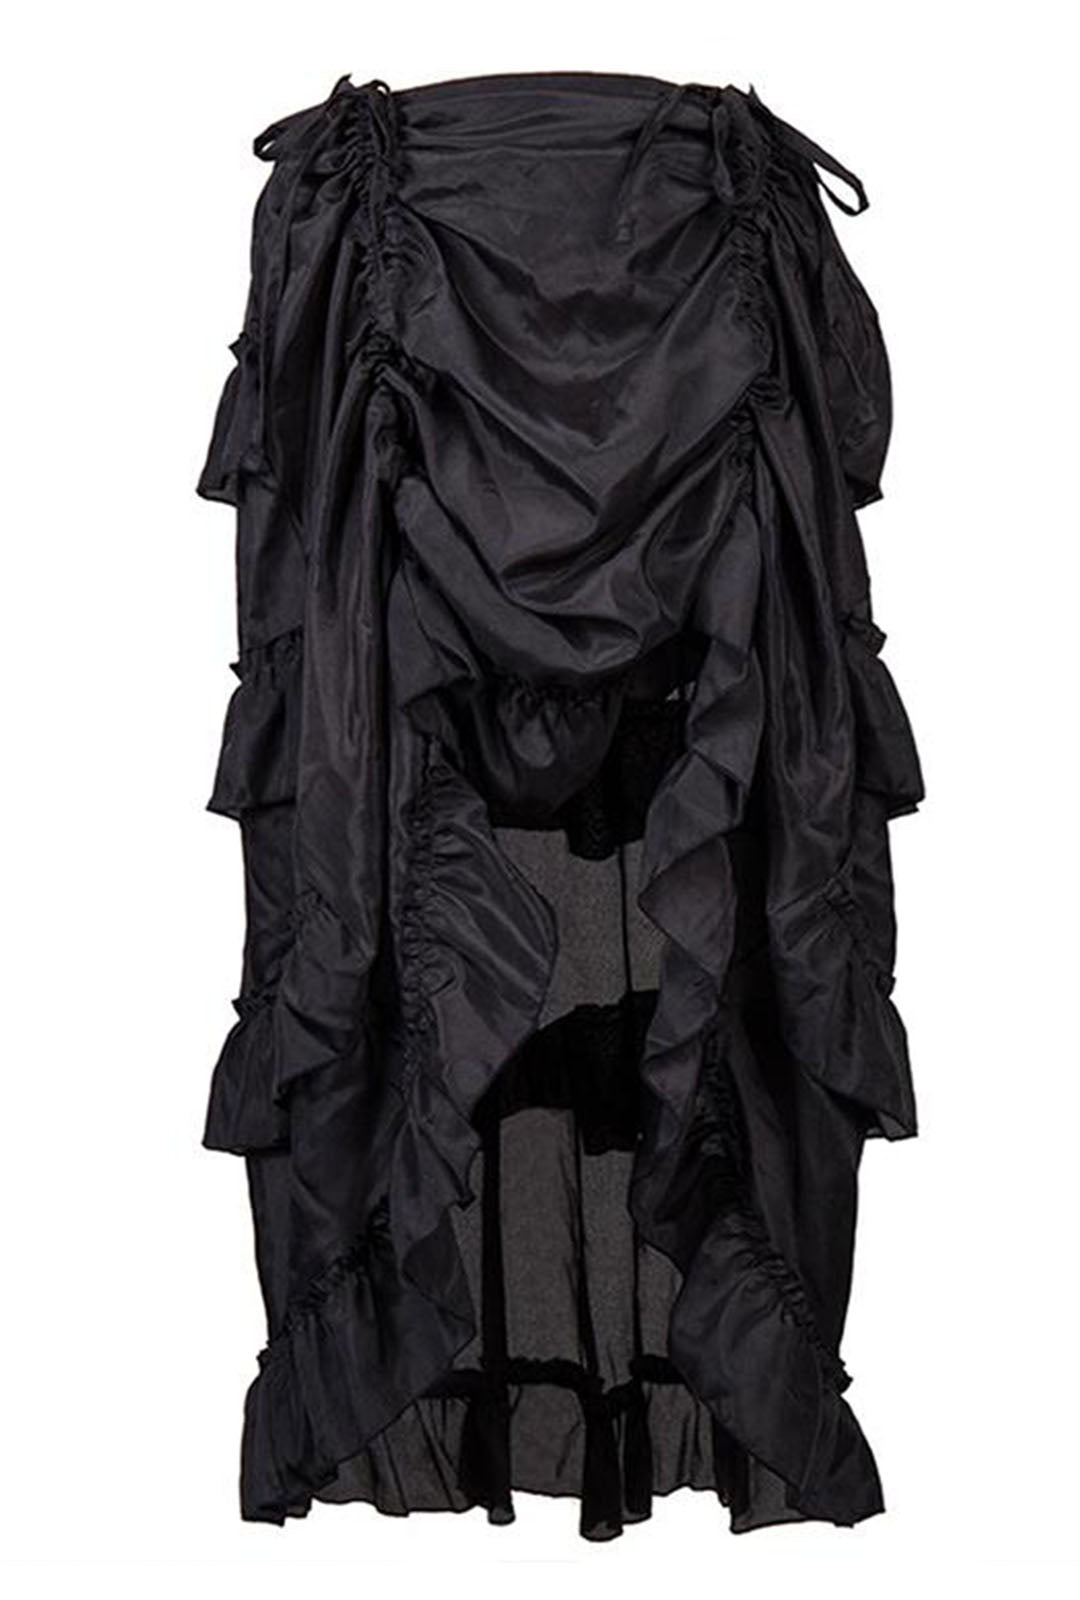 Black High-Low Steampunk Skirt